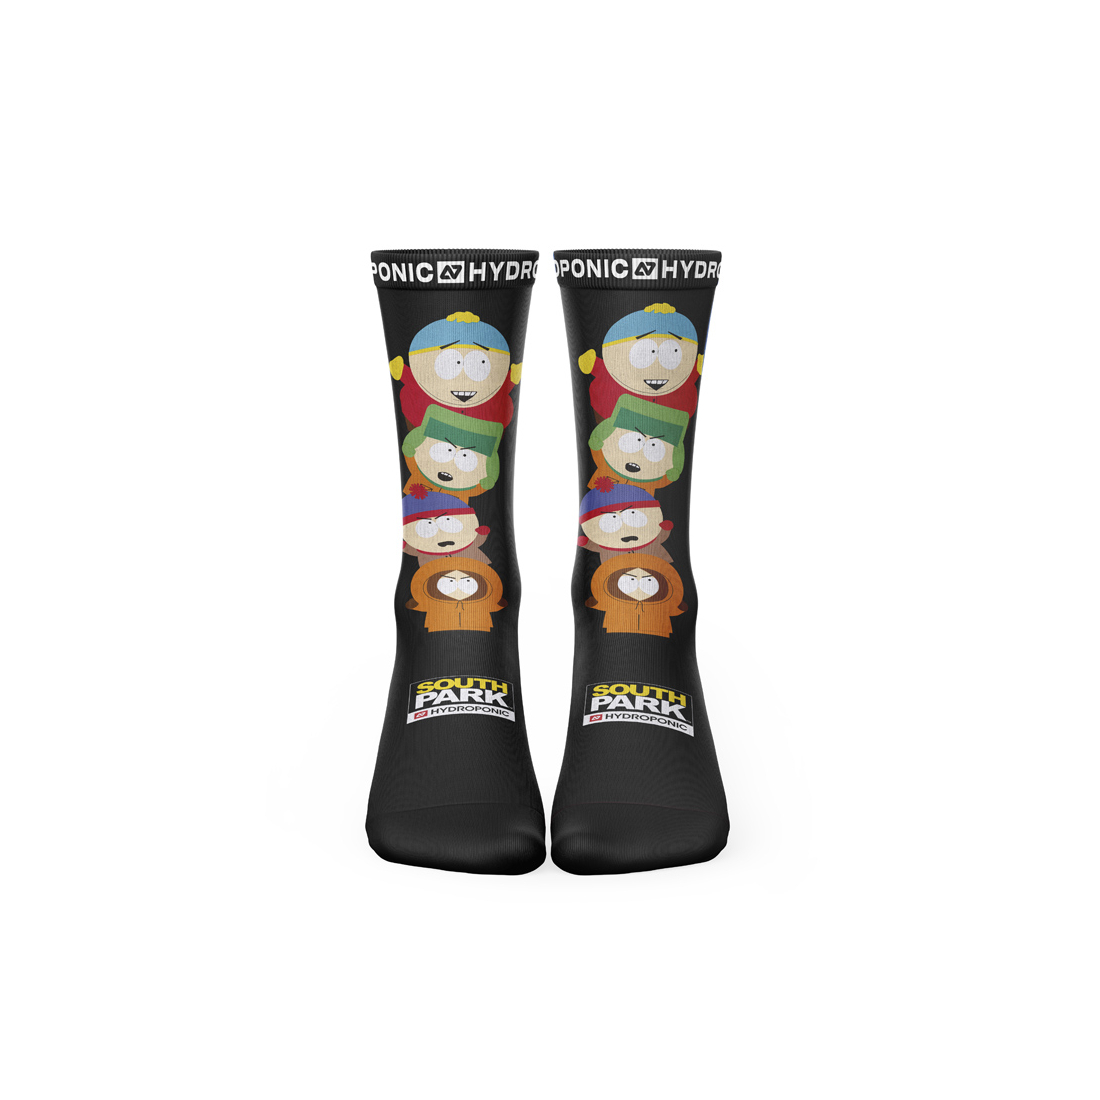 HYDROPONIC South Park Socks PILE BLACK SK021 - 2